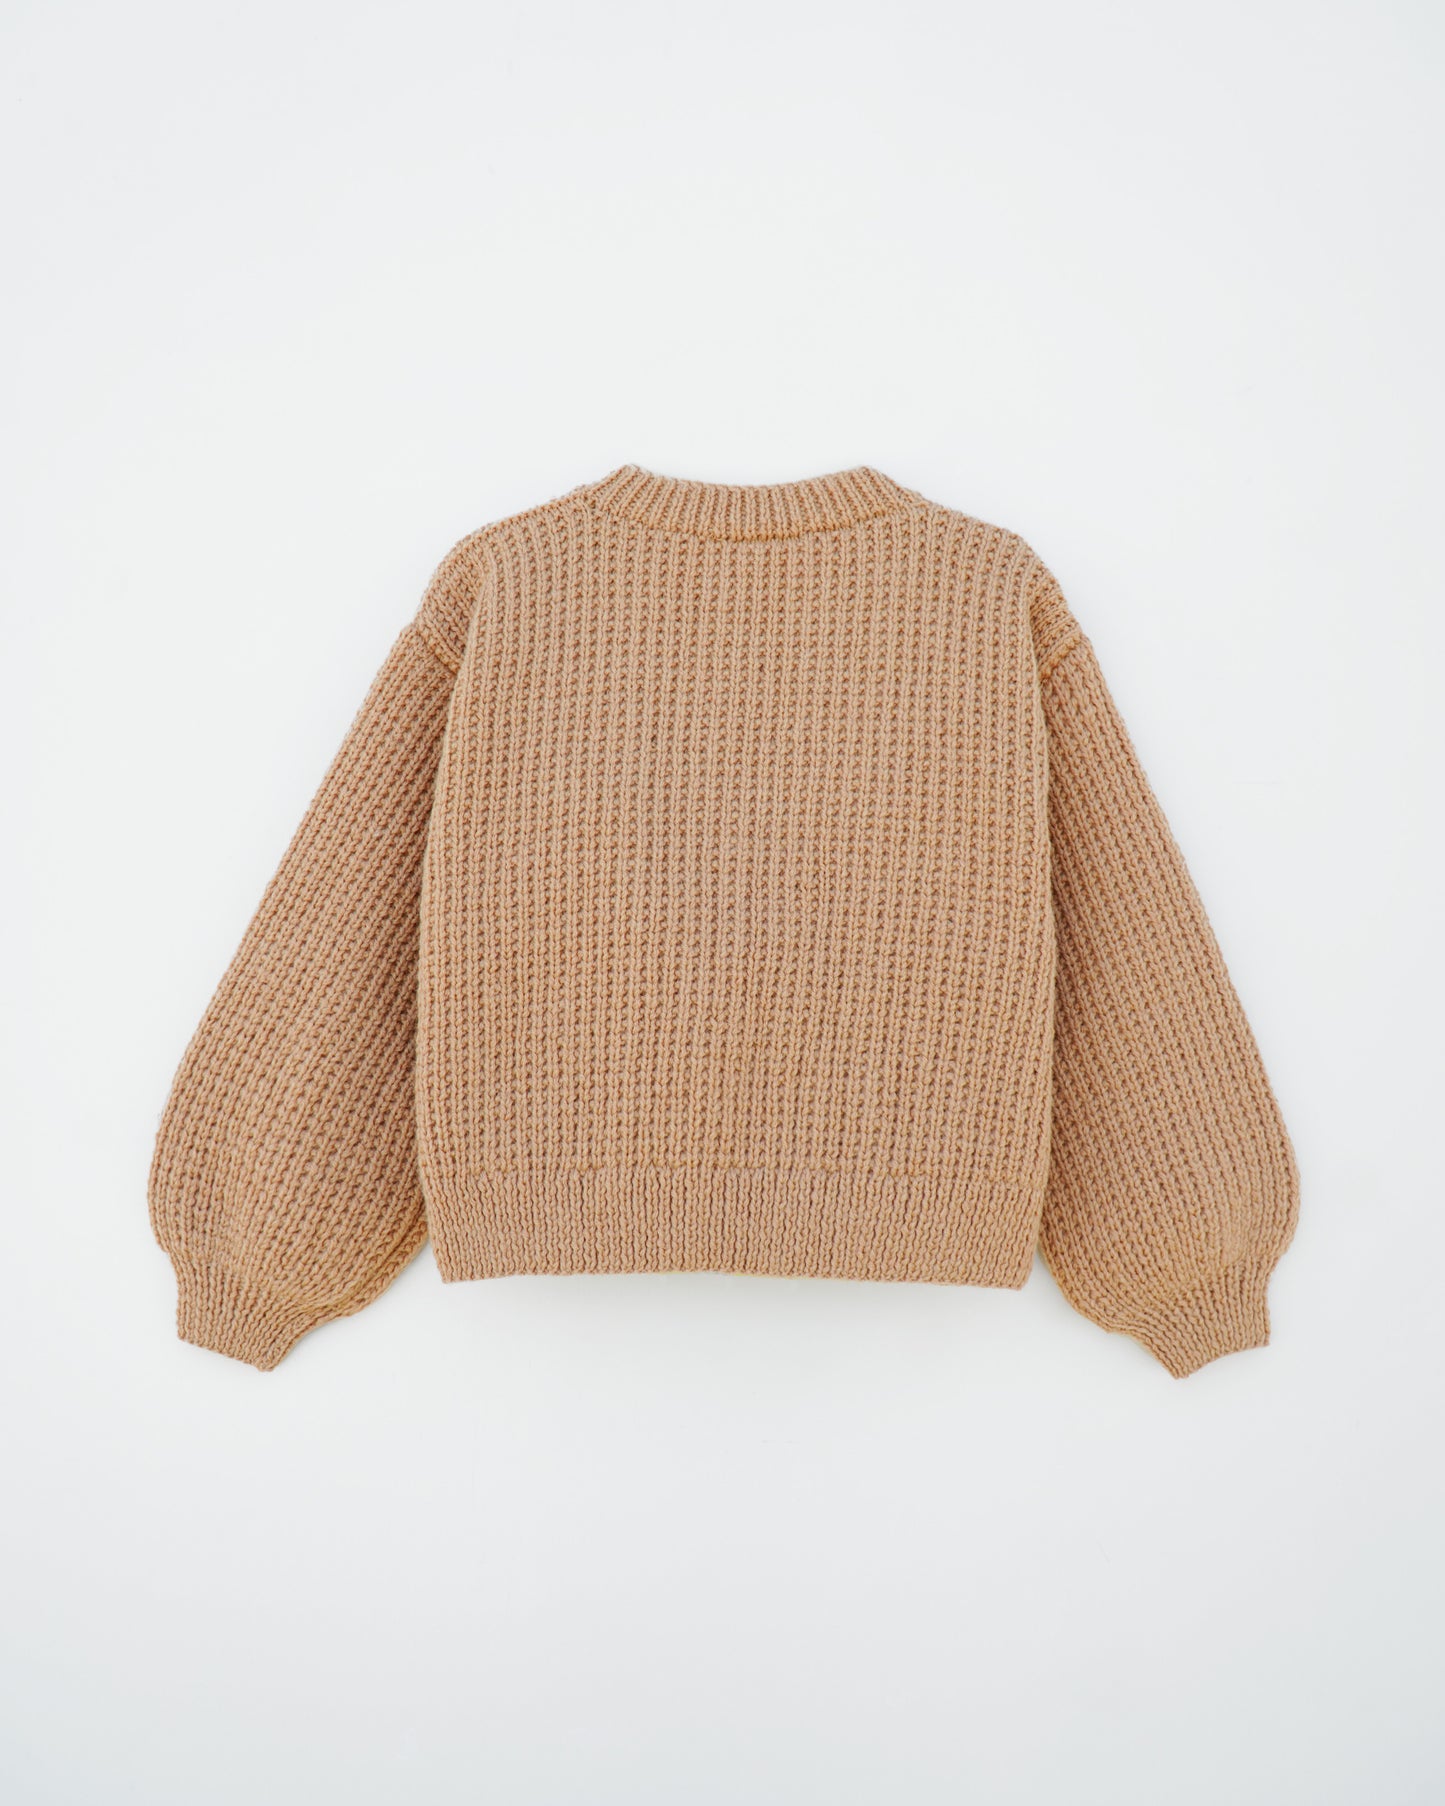 Cardigan No.24 | Easy knitting pattern